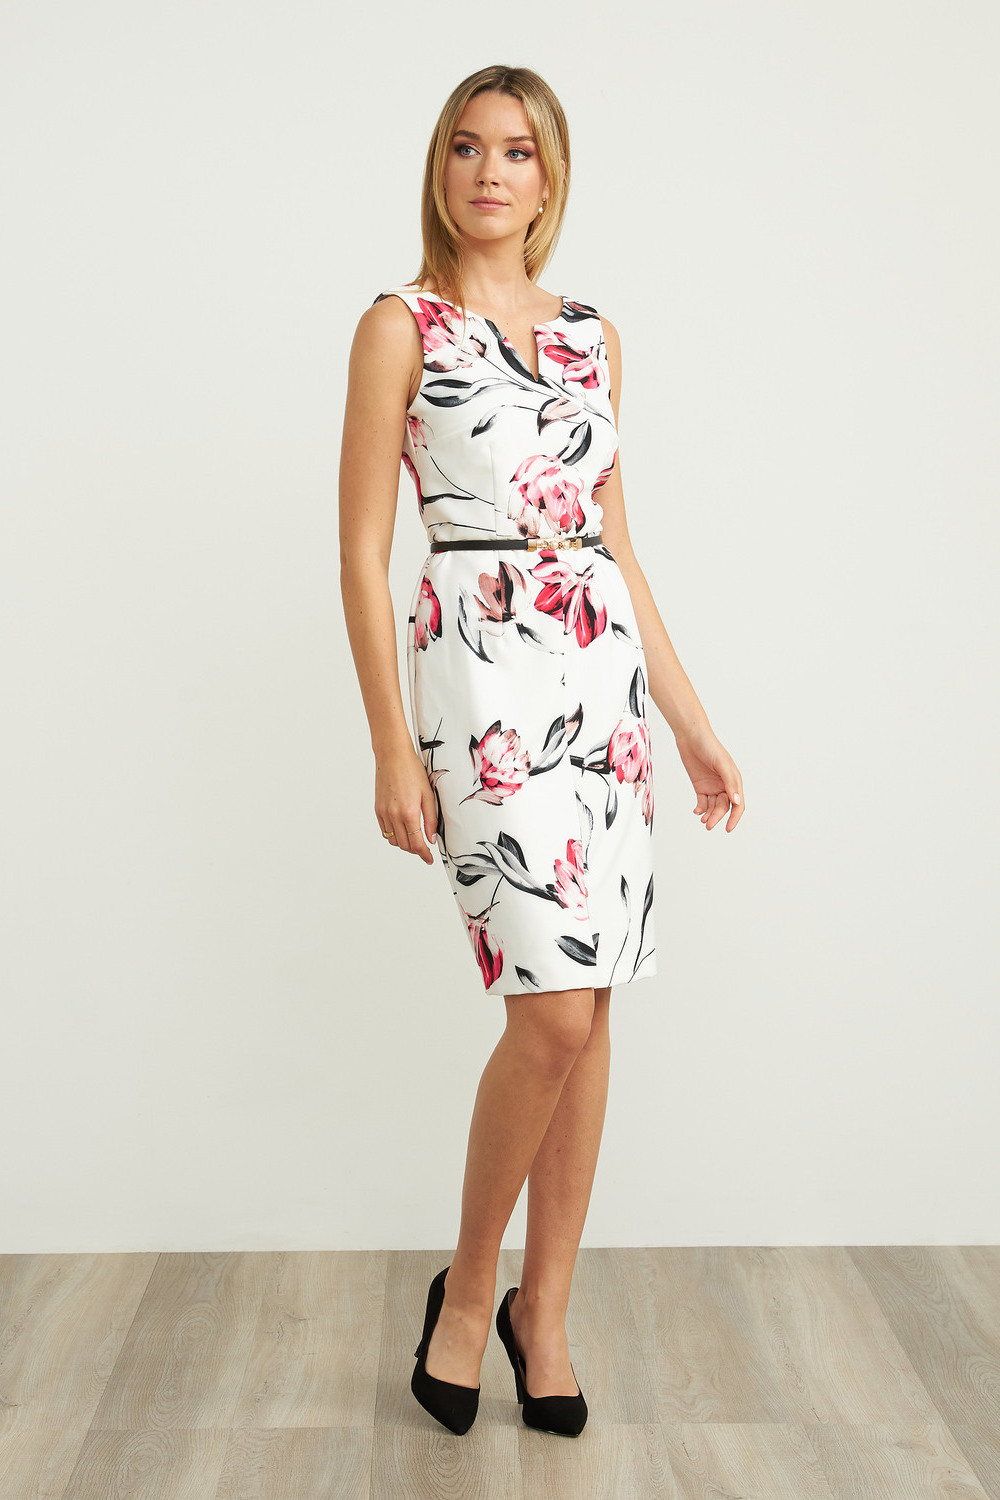 Joseph Ribkoff Floral Print V-Neck Dress Style 202054. Offwhite/multi